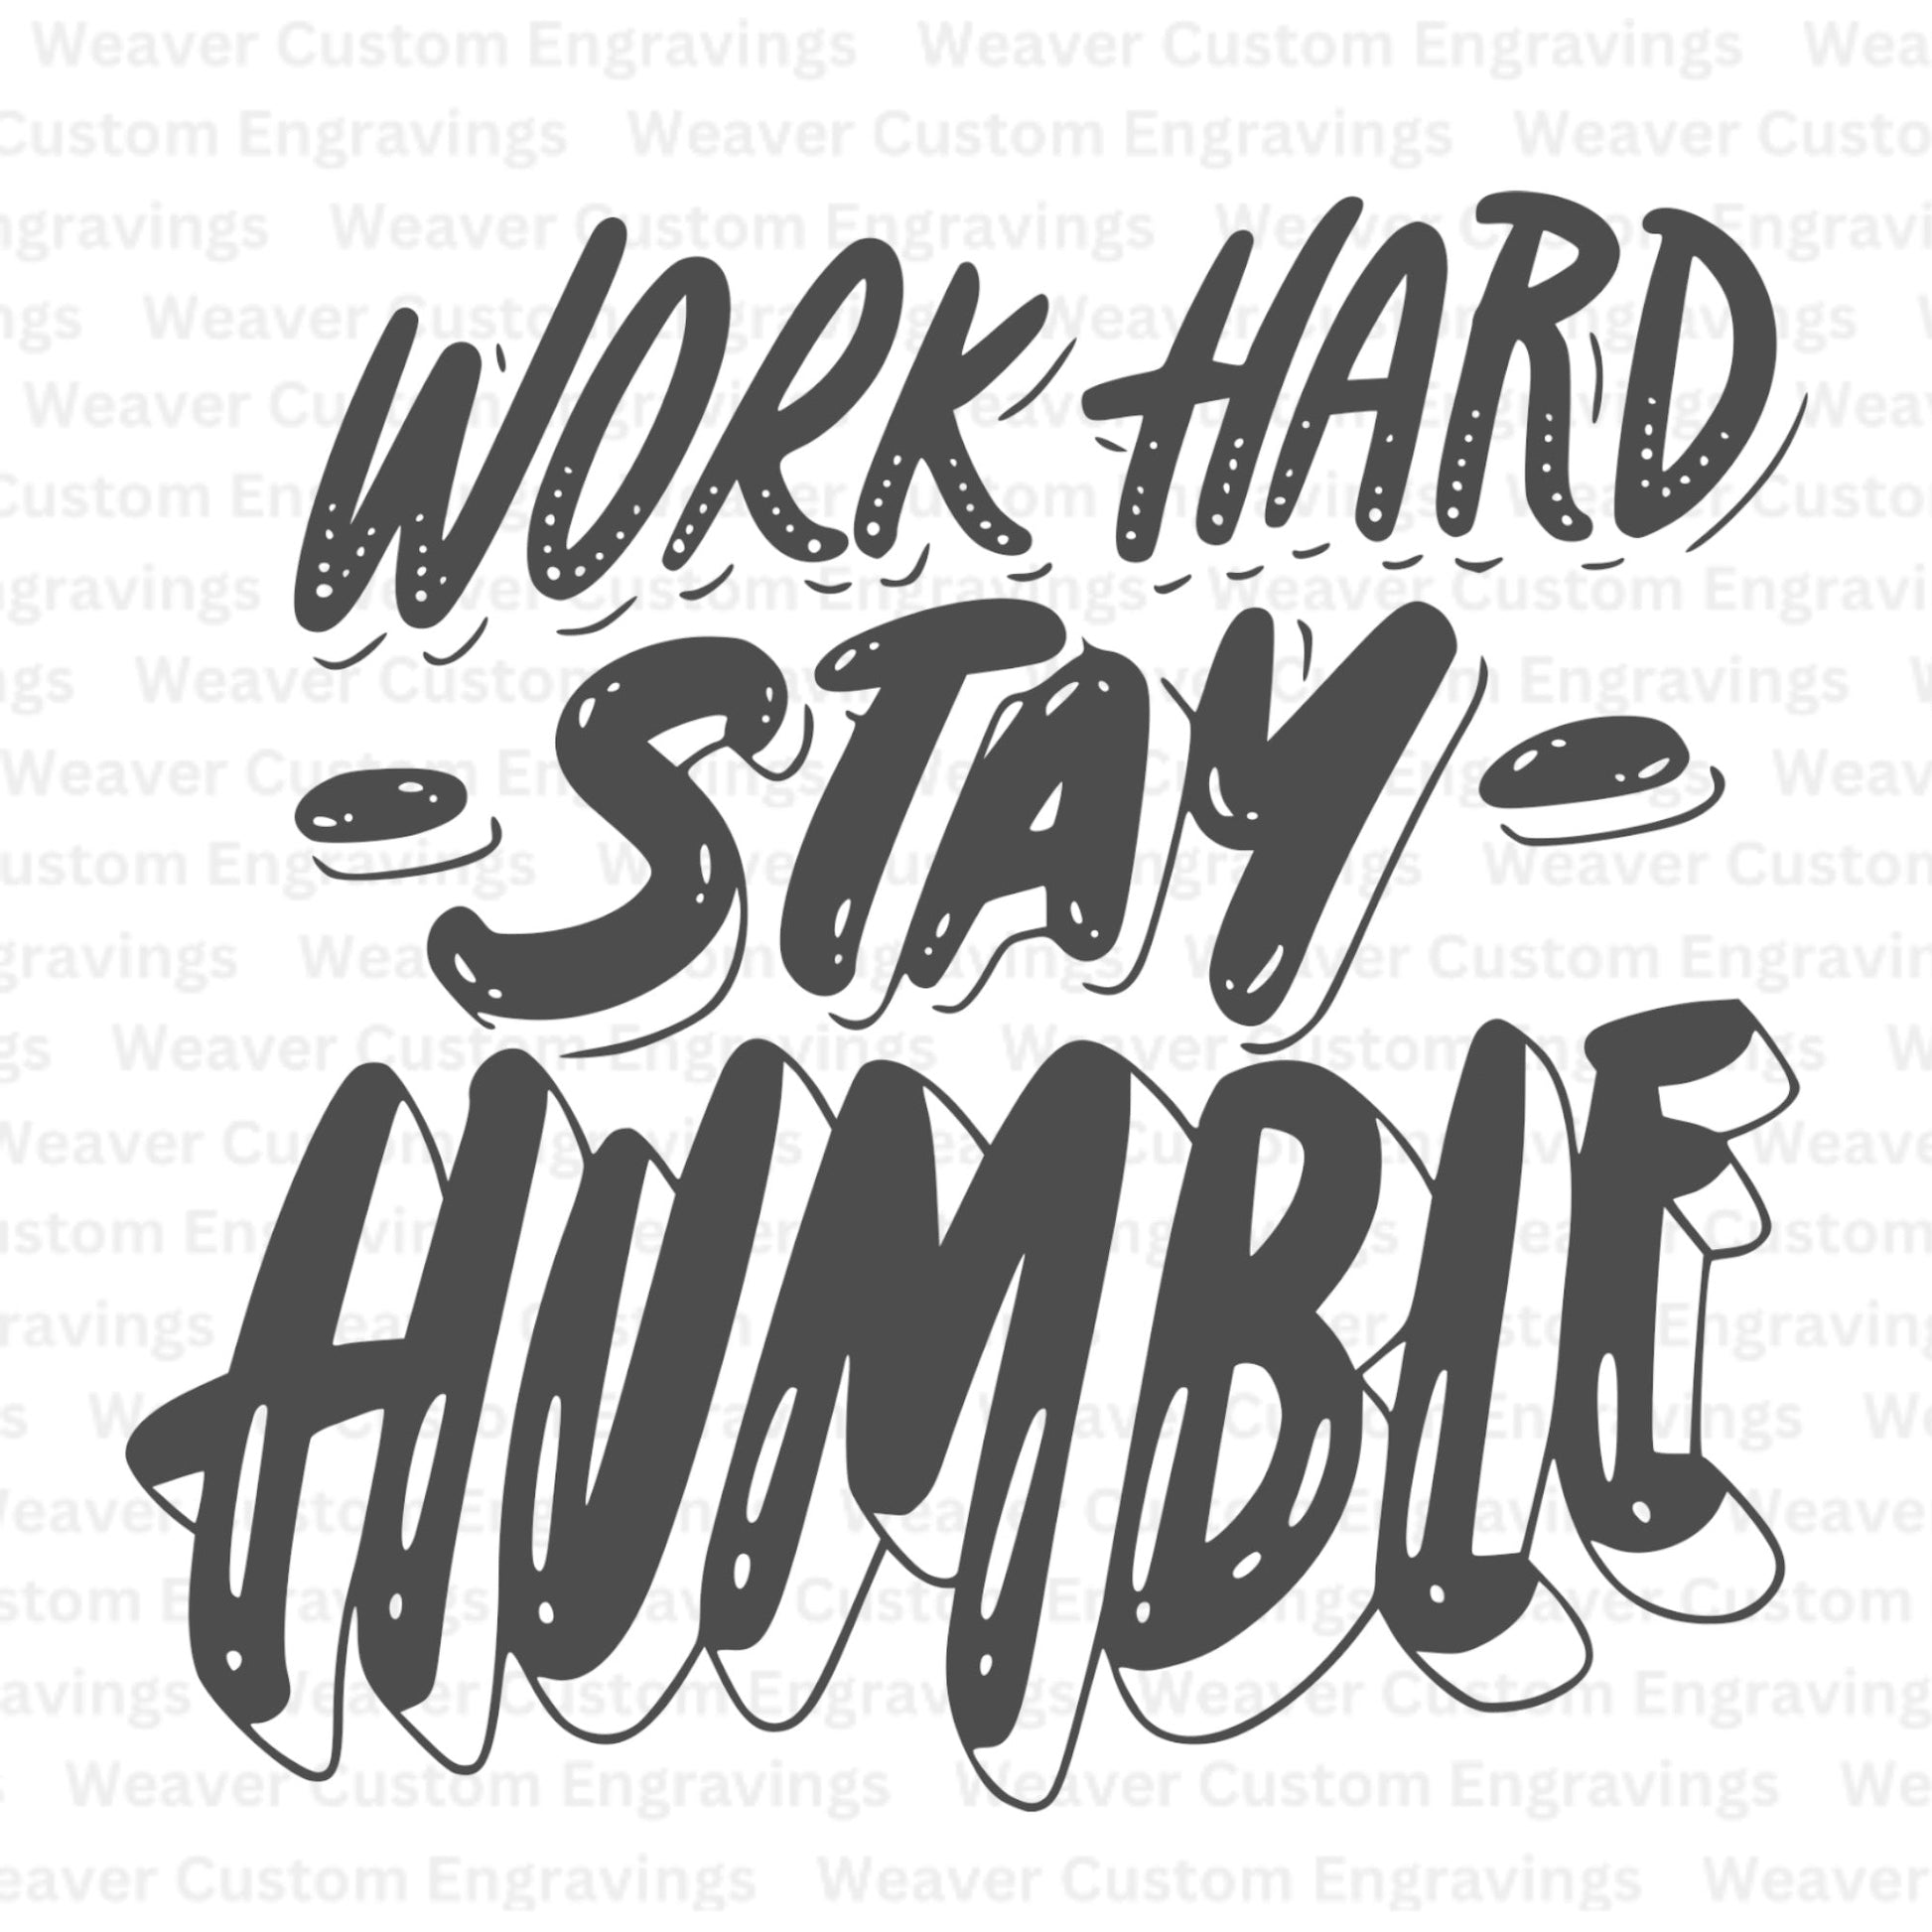 Work Hard, Stay Humble (Digital Download) Digital Artwork Weaver Custom Engravings Digital Downloads   